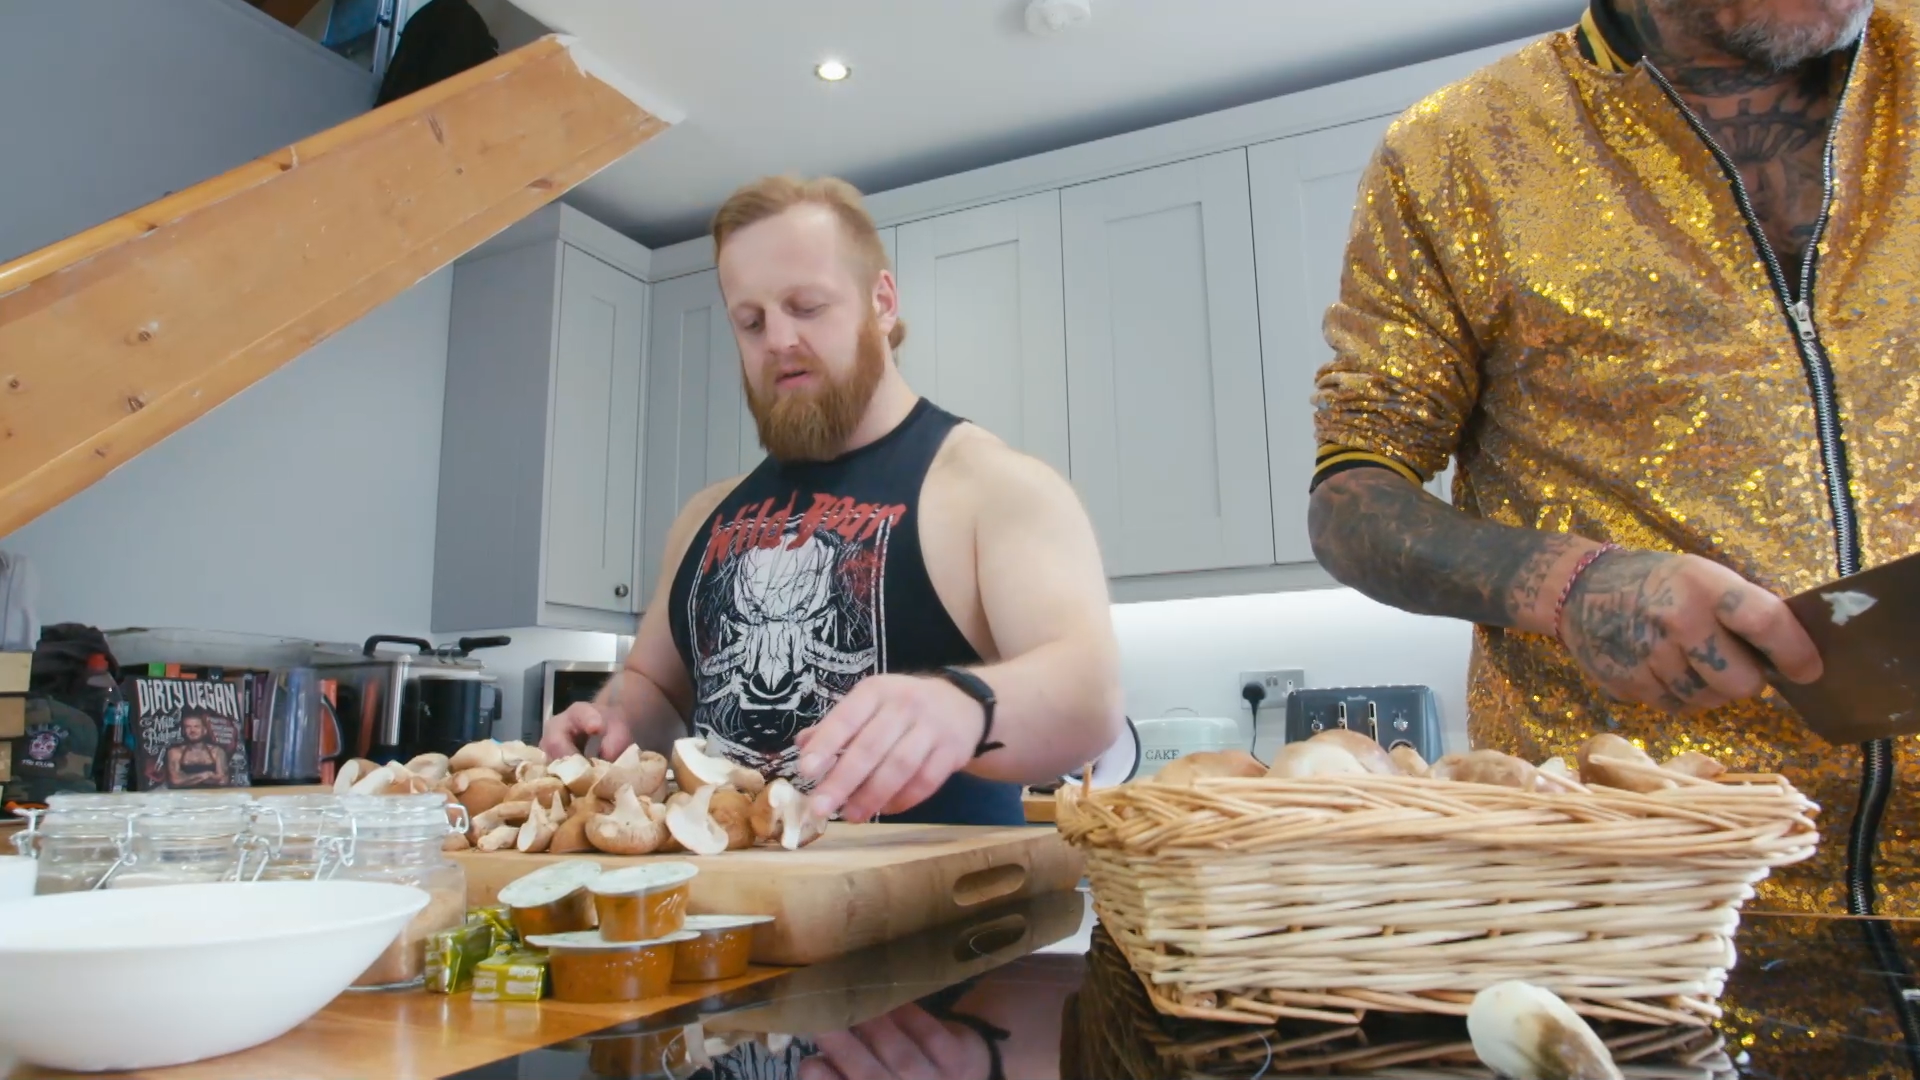 A wrestler chopping mushrooms in a kitchen